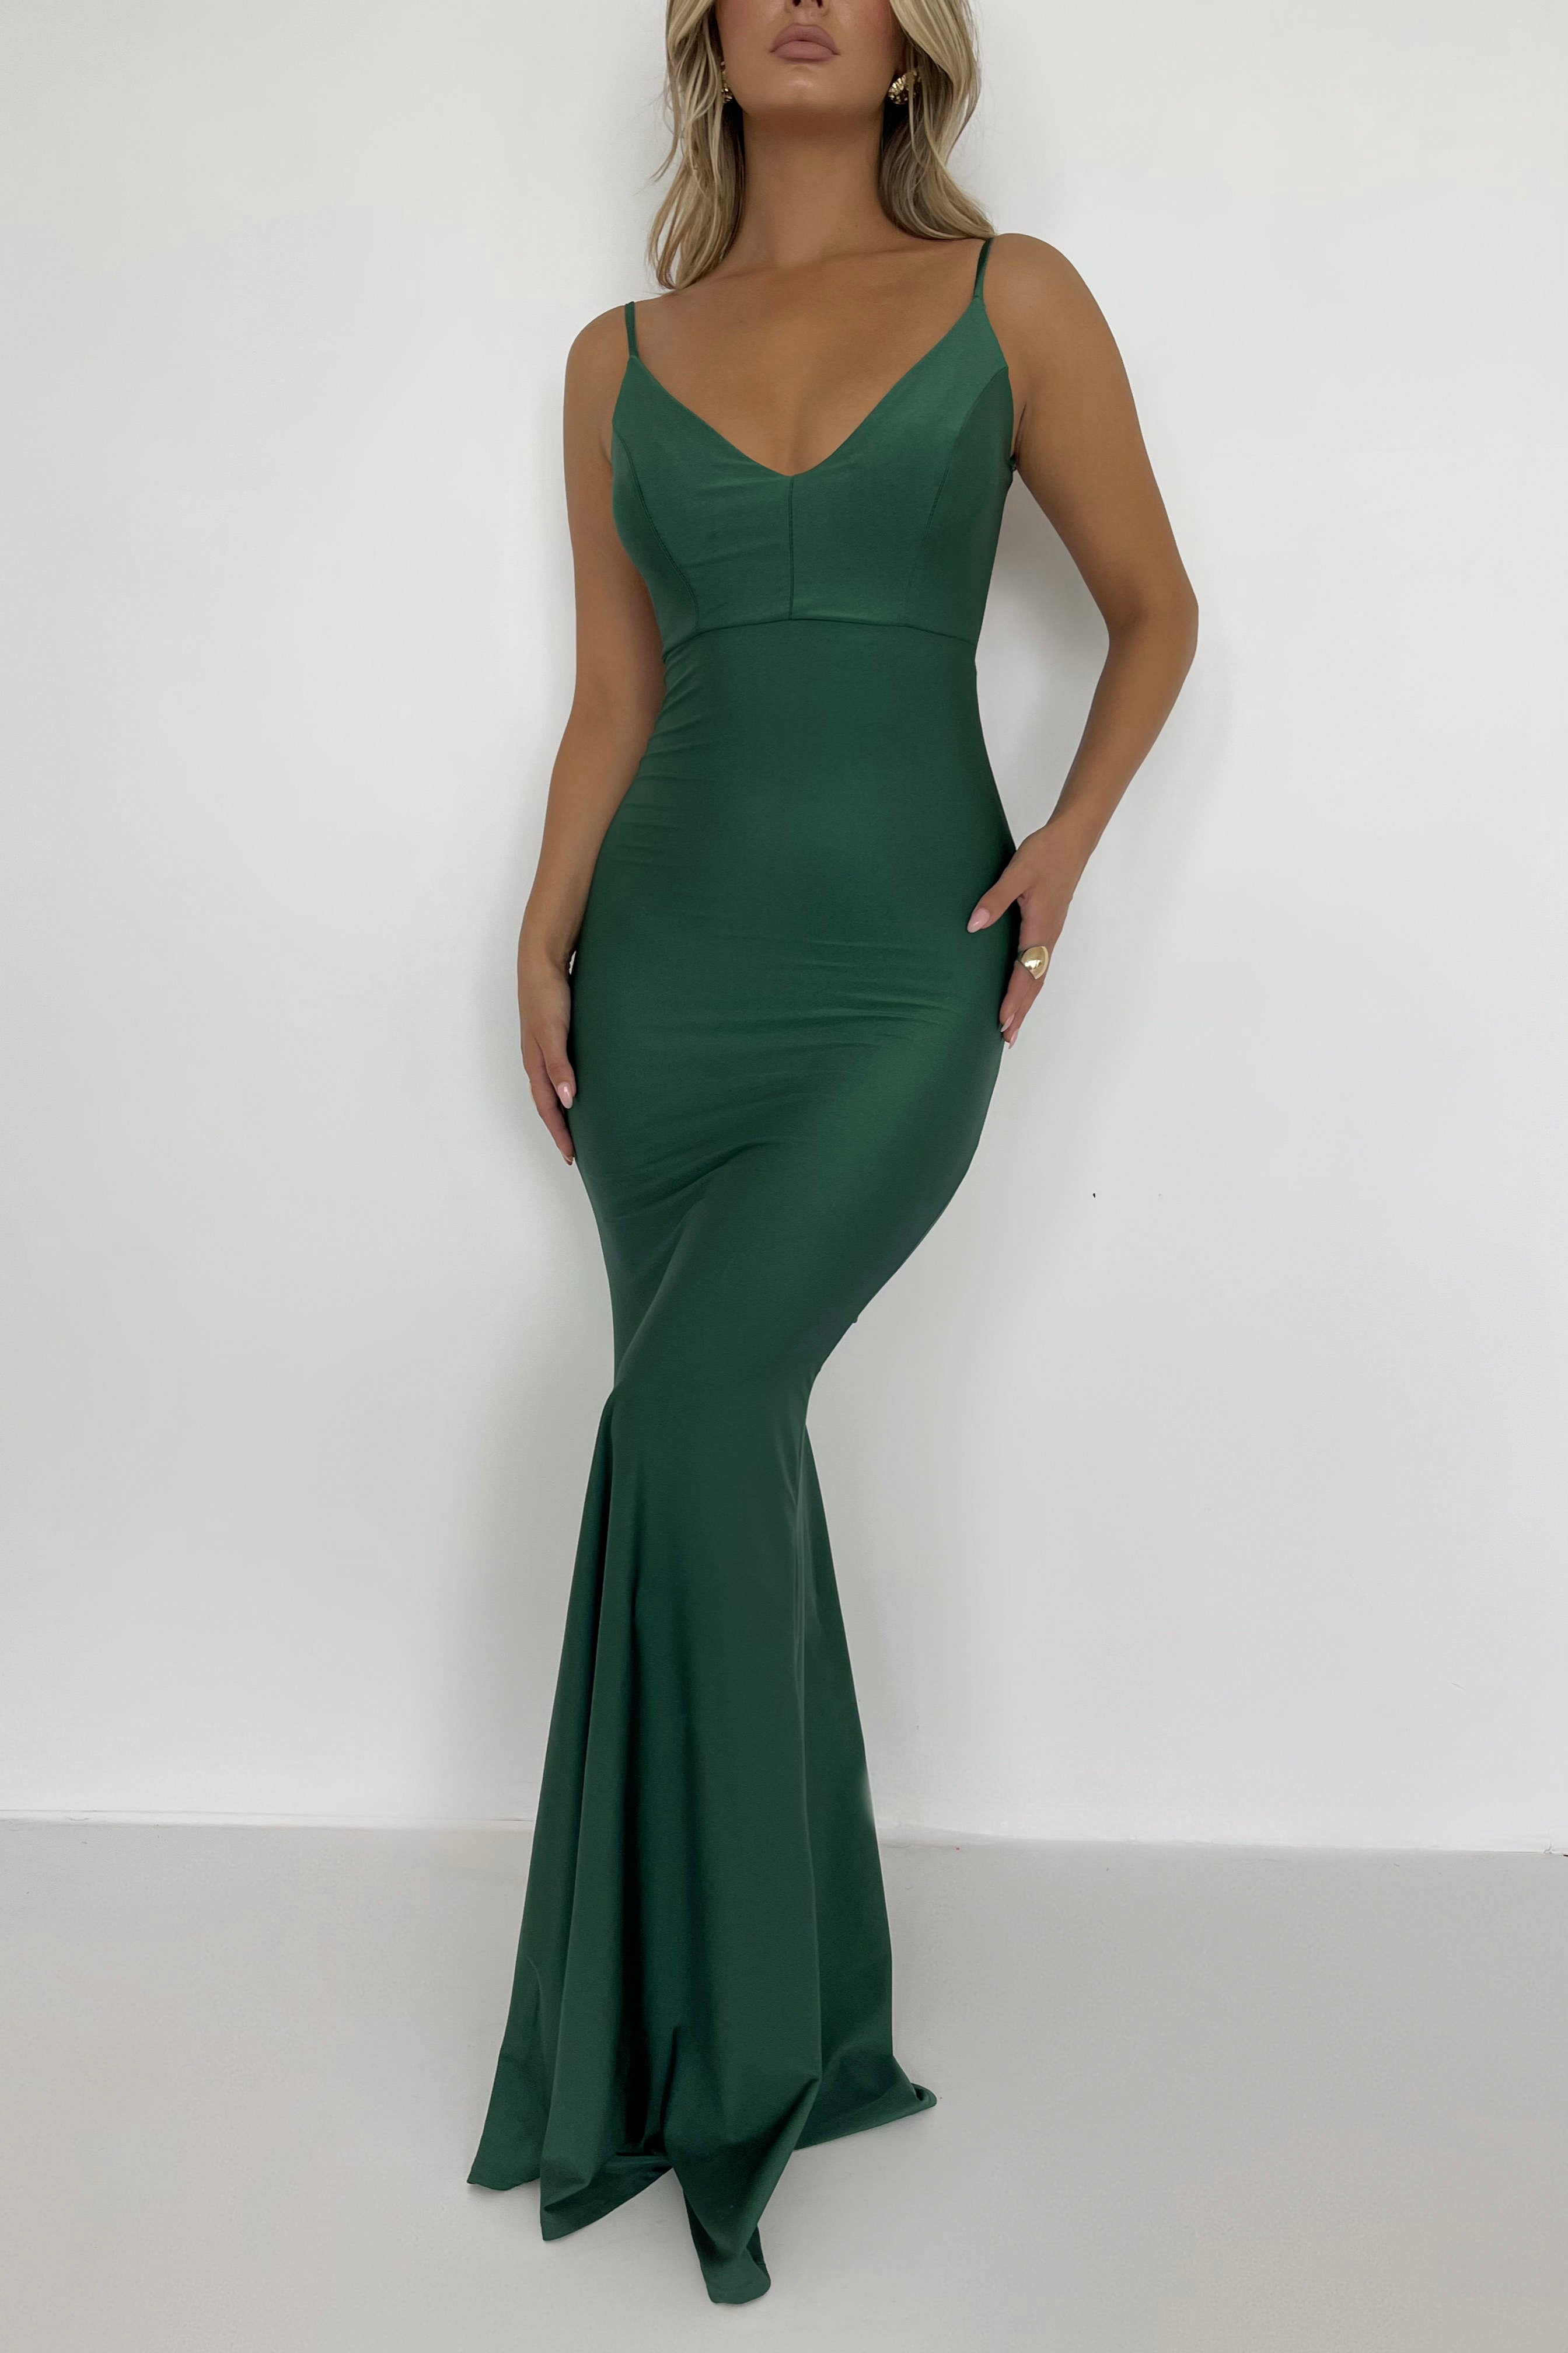 Umbra Hunter Green Dress